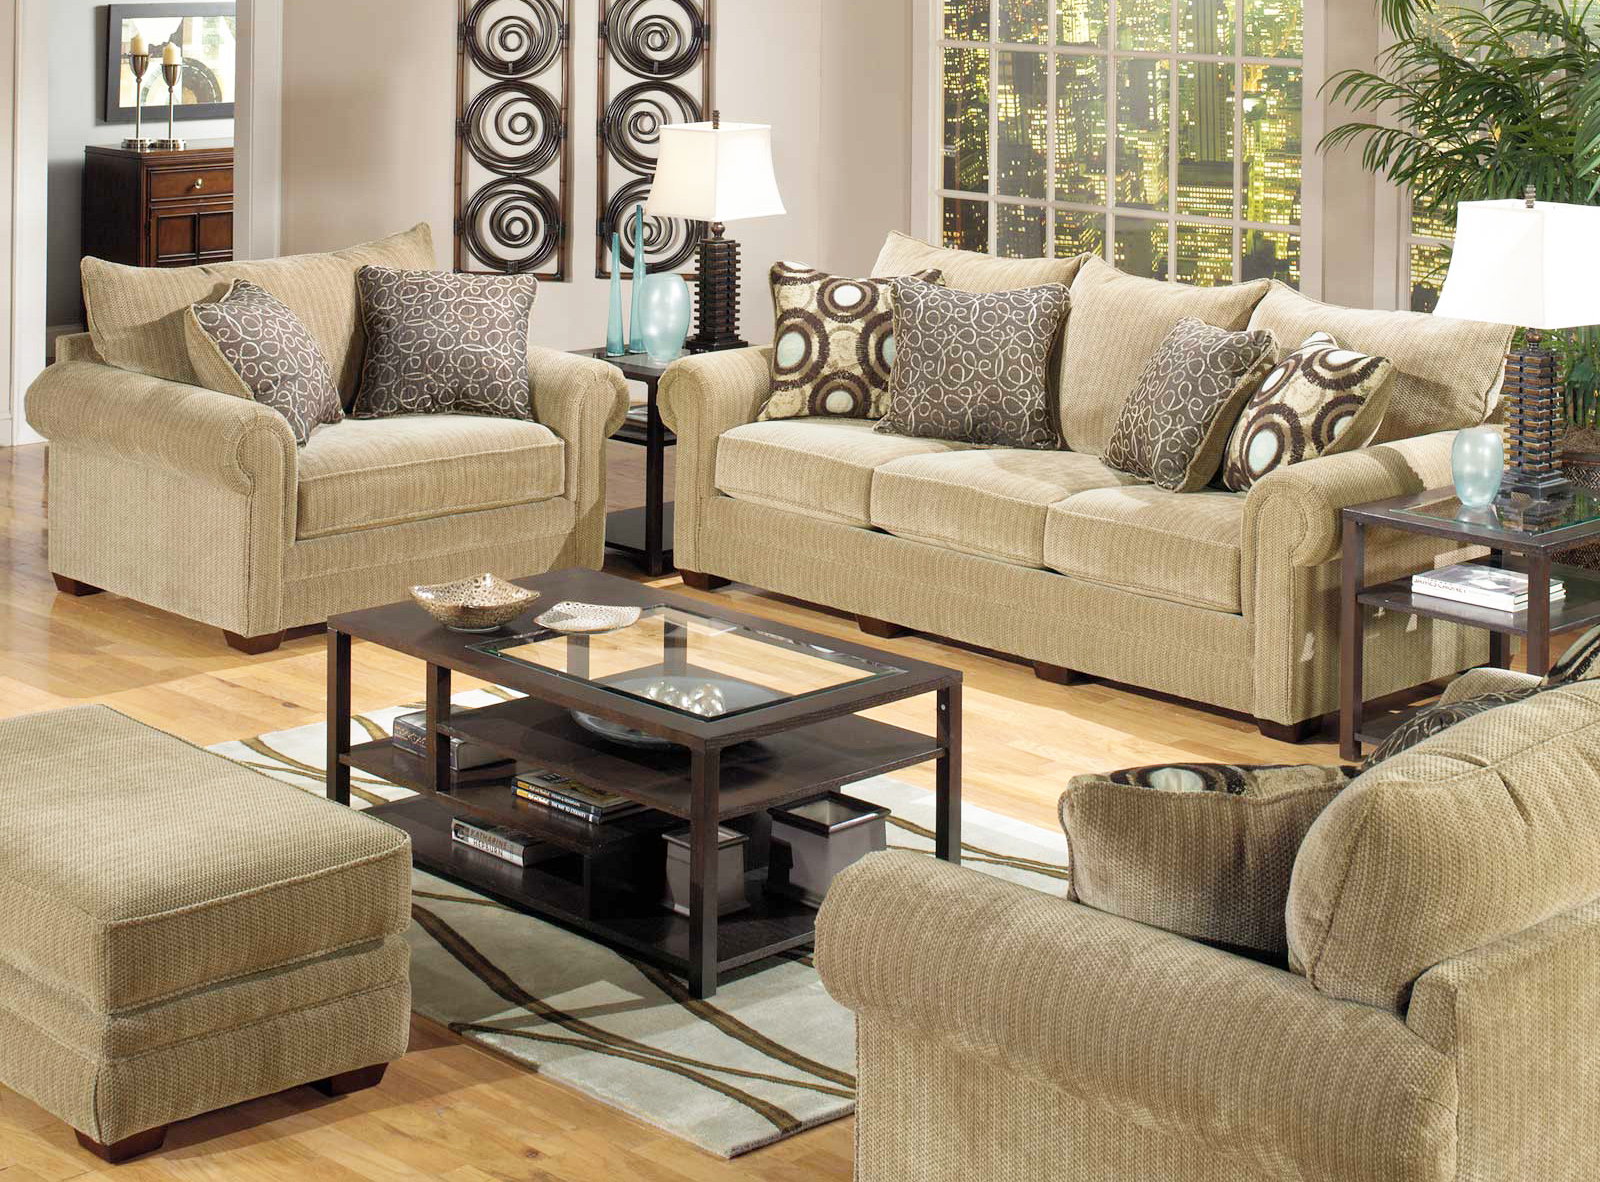 Three Furniture Arrangement Tips that Will Make Room Looks Bigger